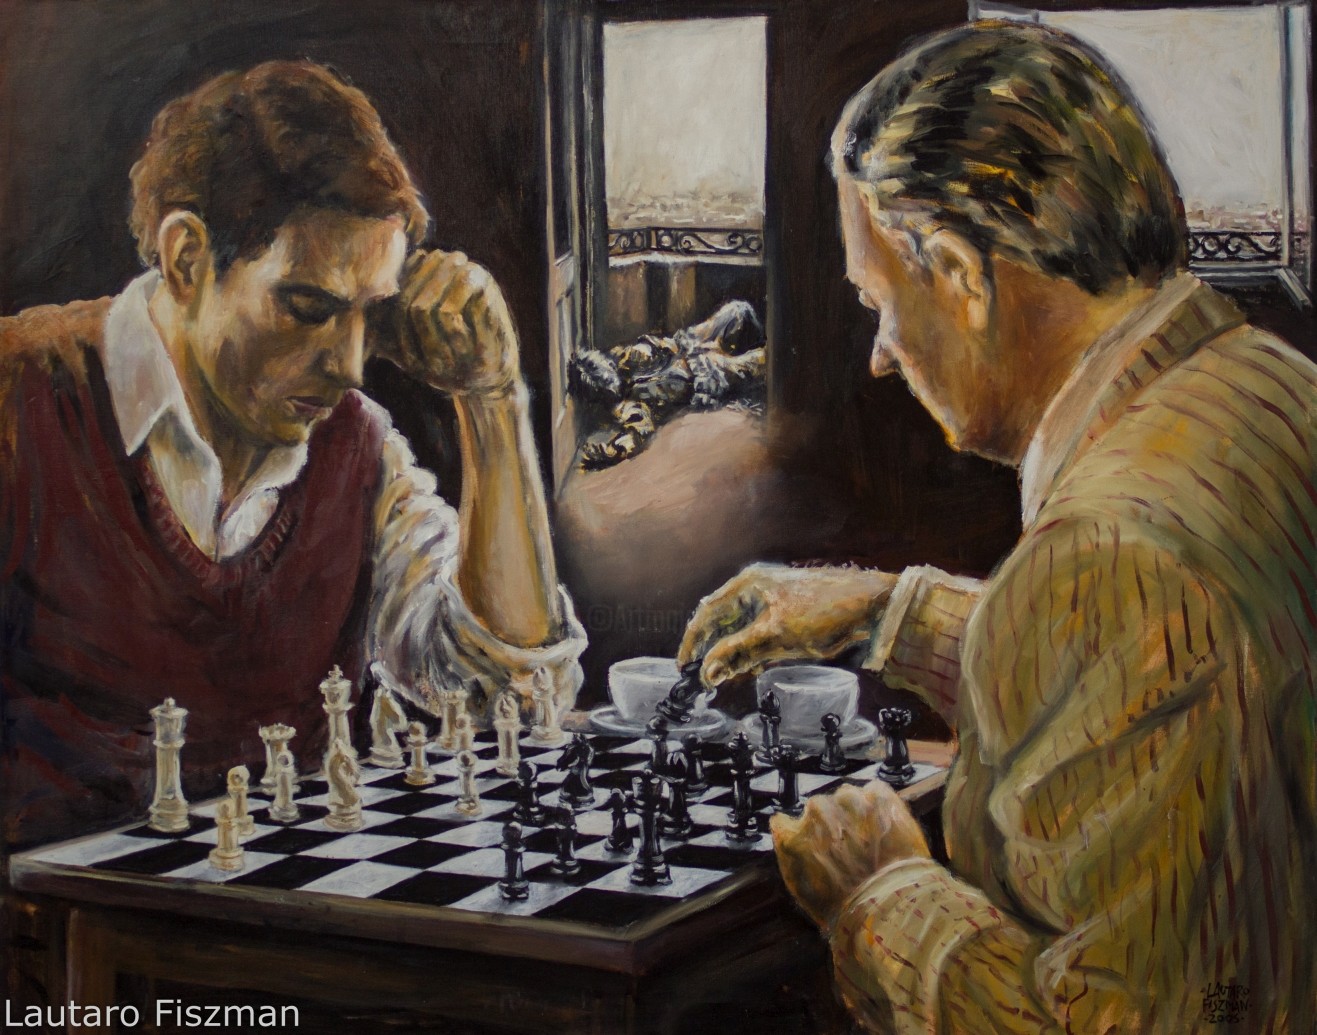 Играть в шахматы 18. Шахматисты картина Джеймса Норткота. Мясоедов игра в шахматы. Картина Марселя Дюшана "шахматная партия".